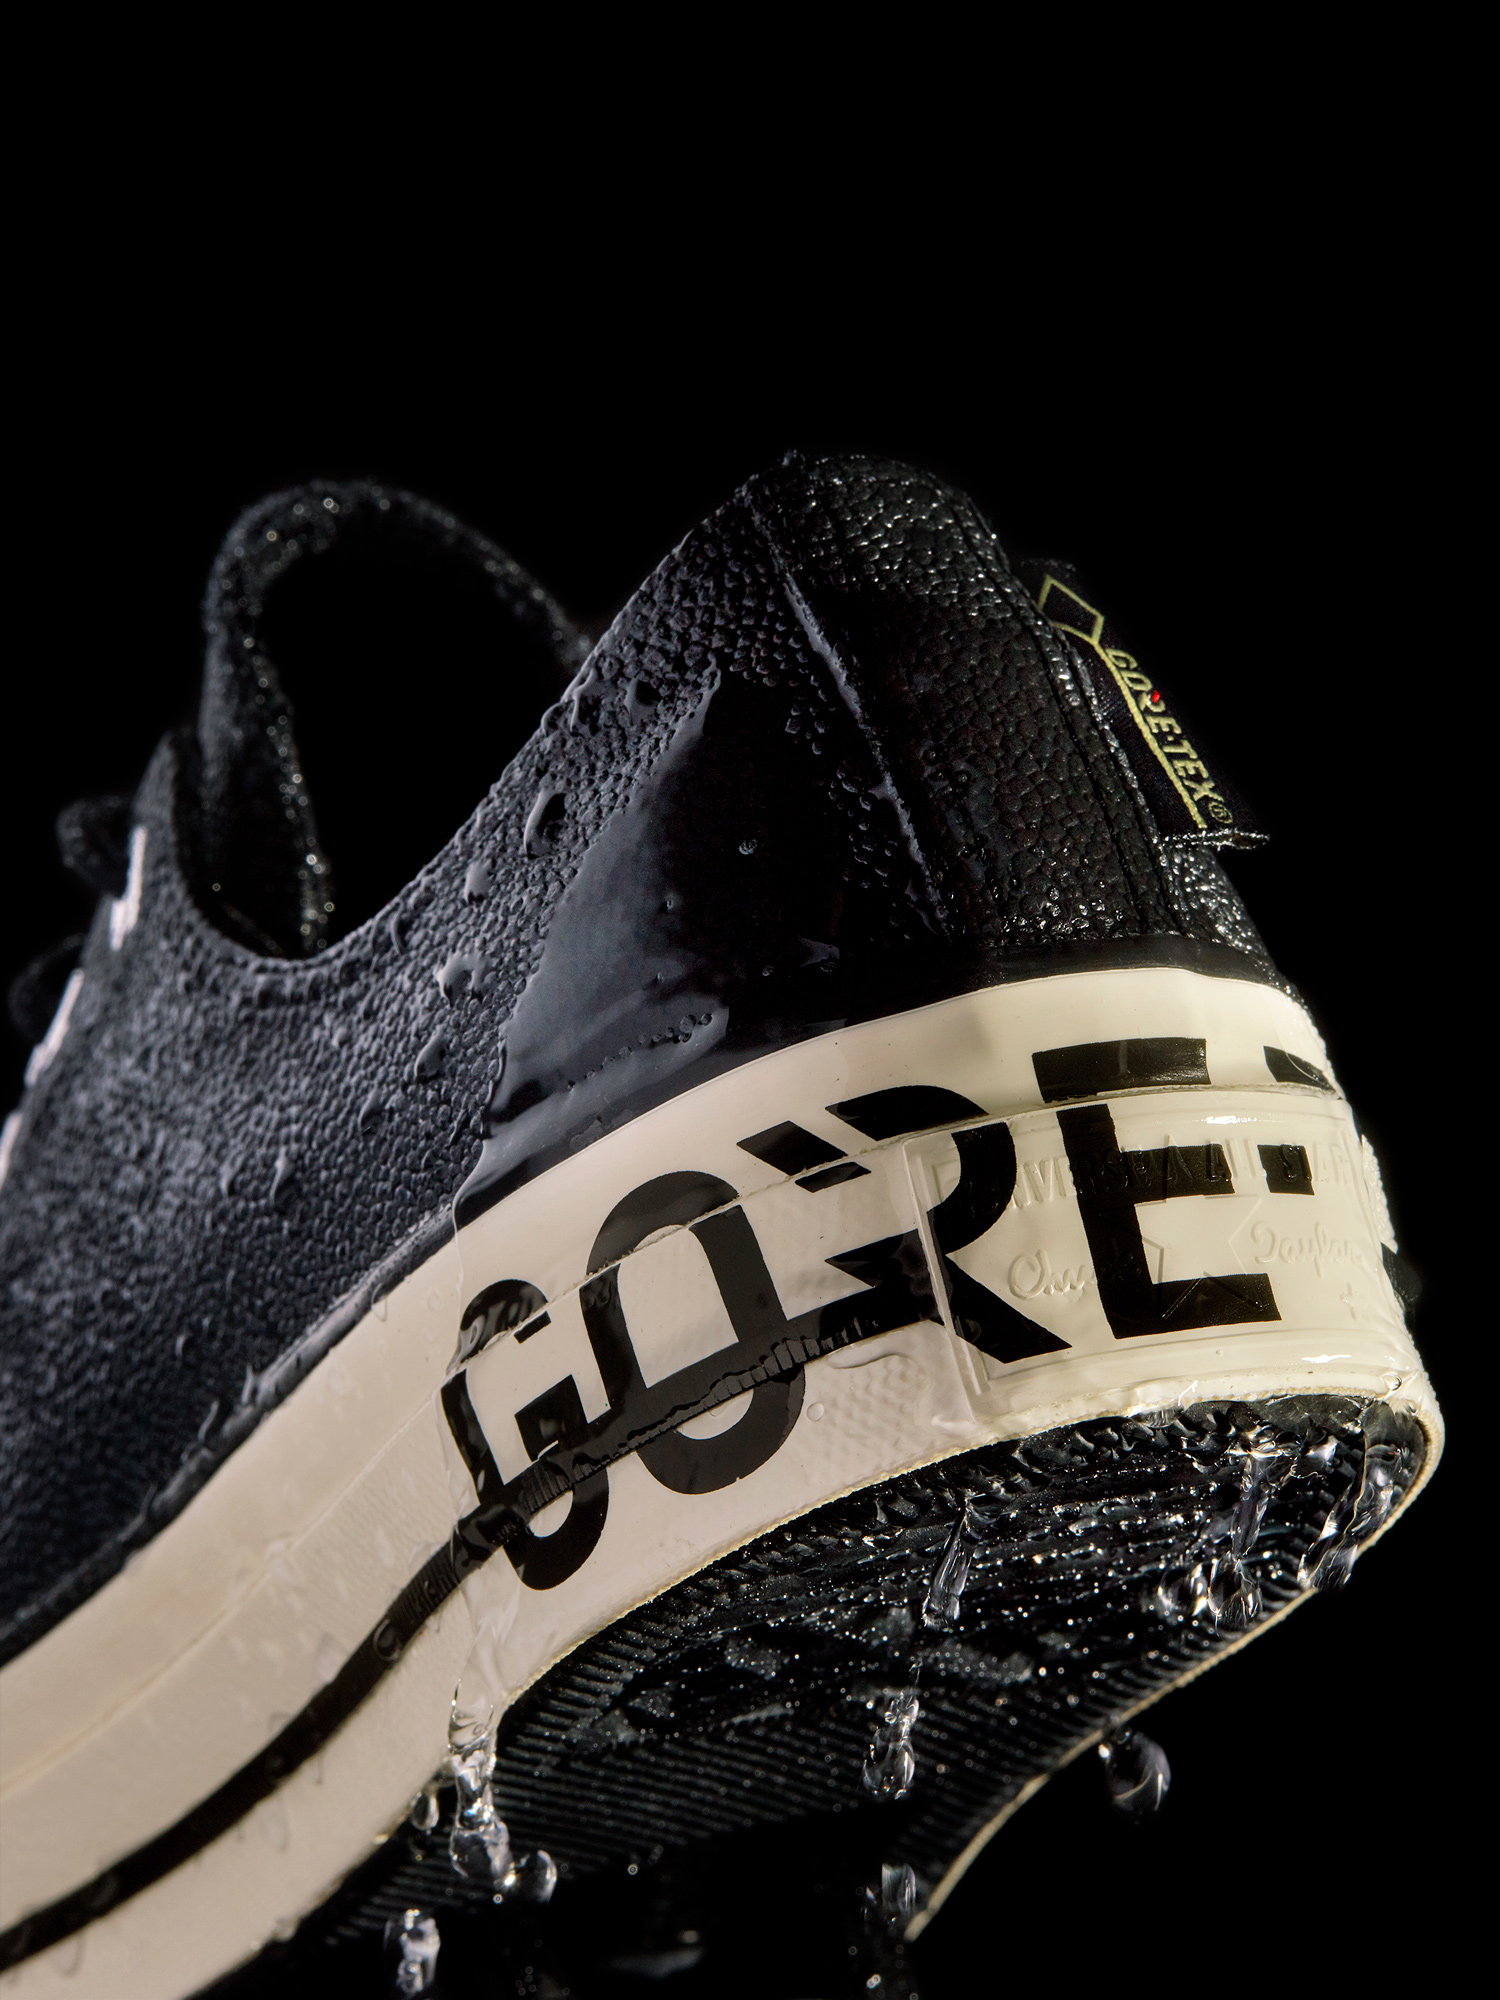 Converse GORE-TEX SS19